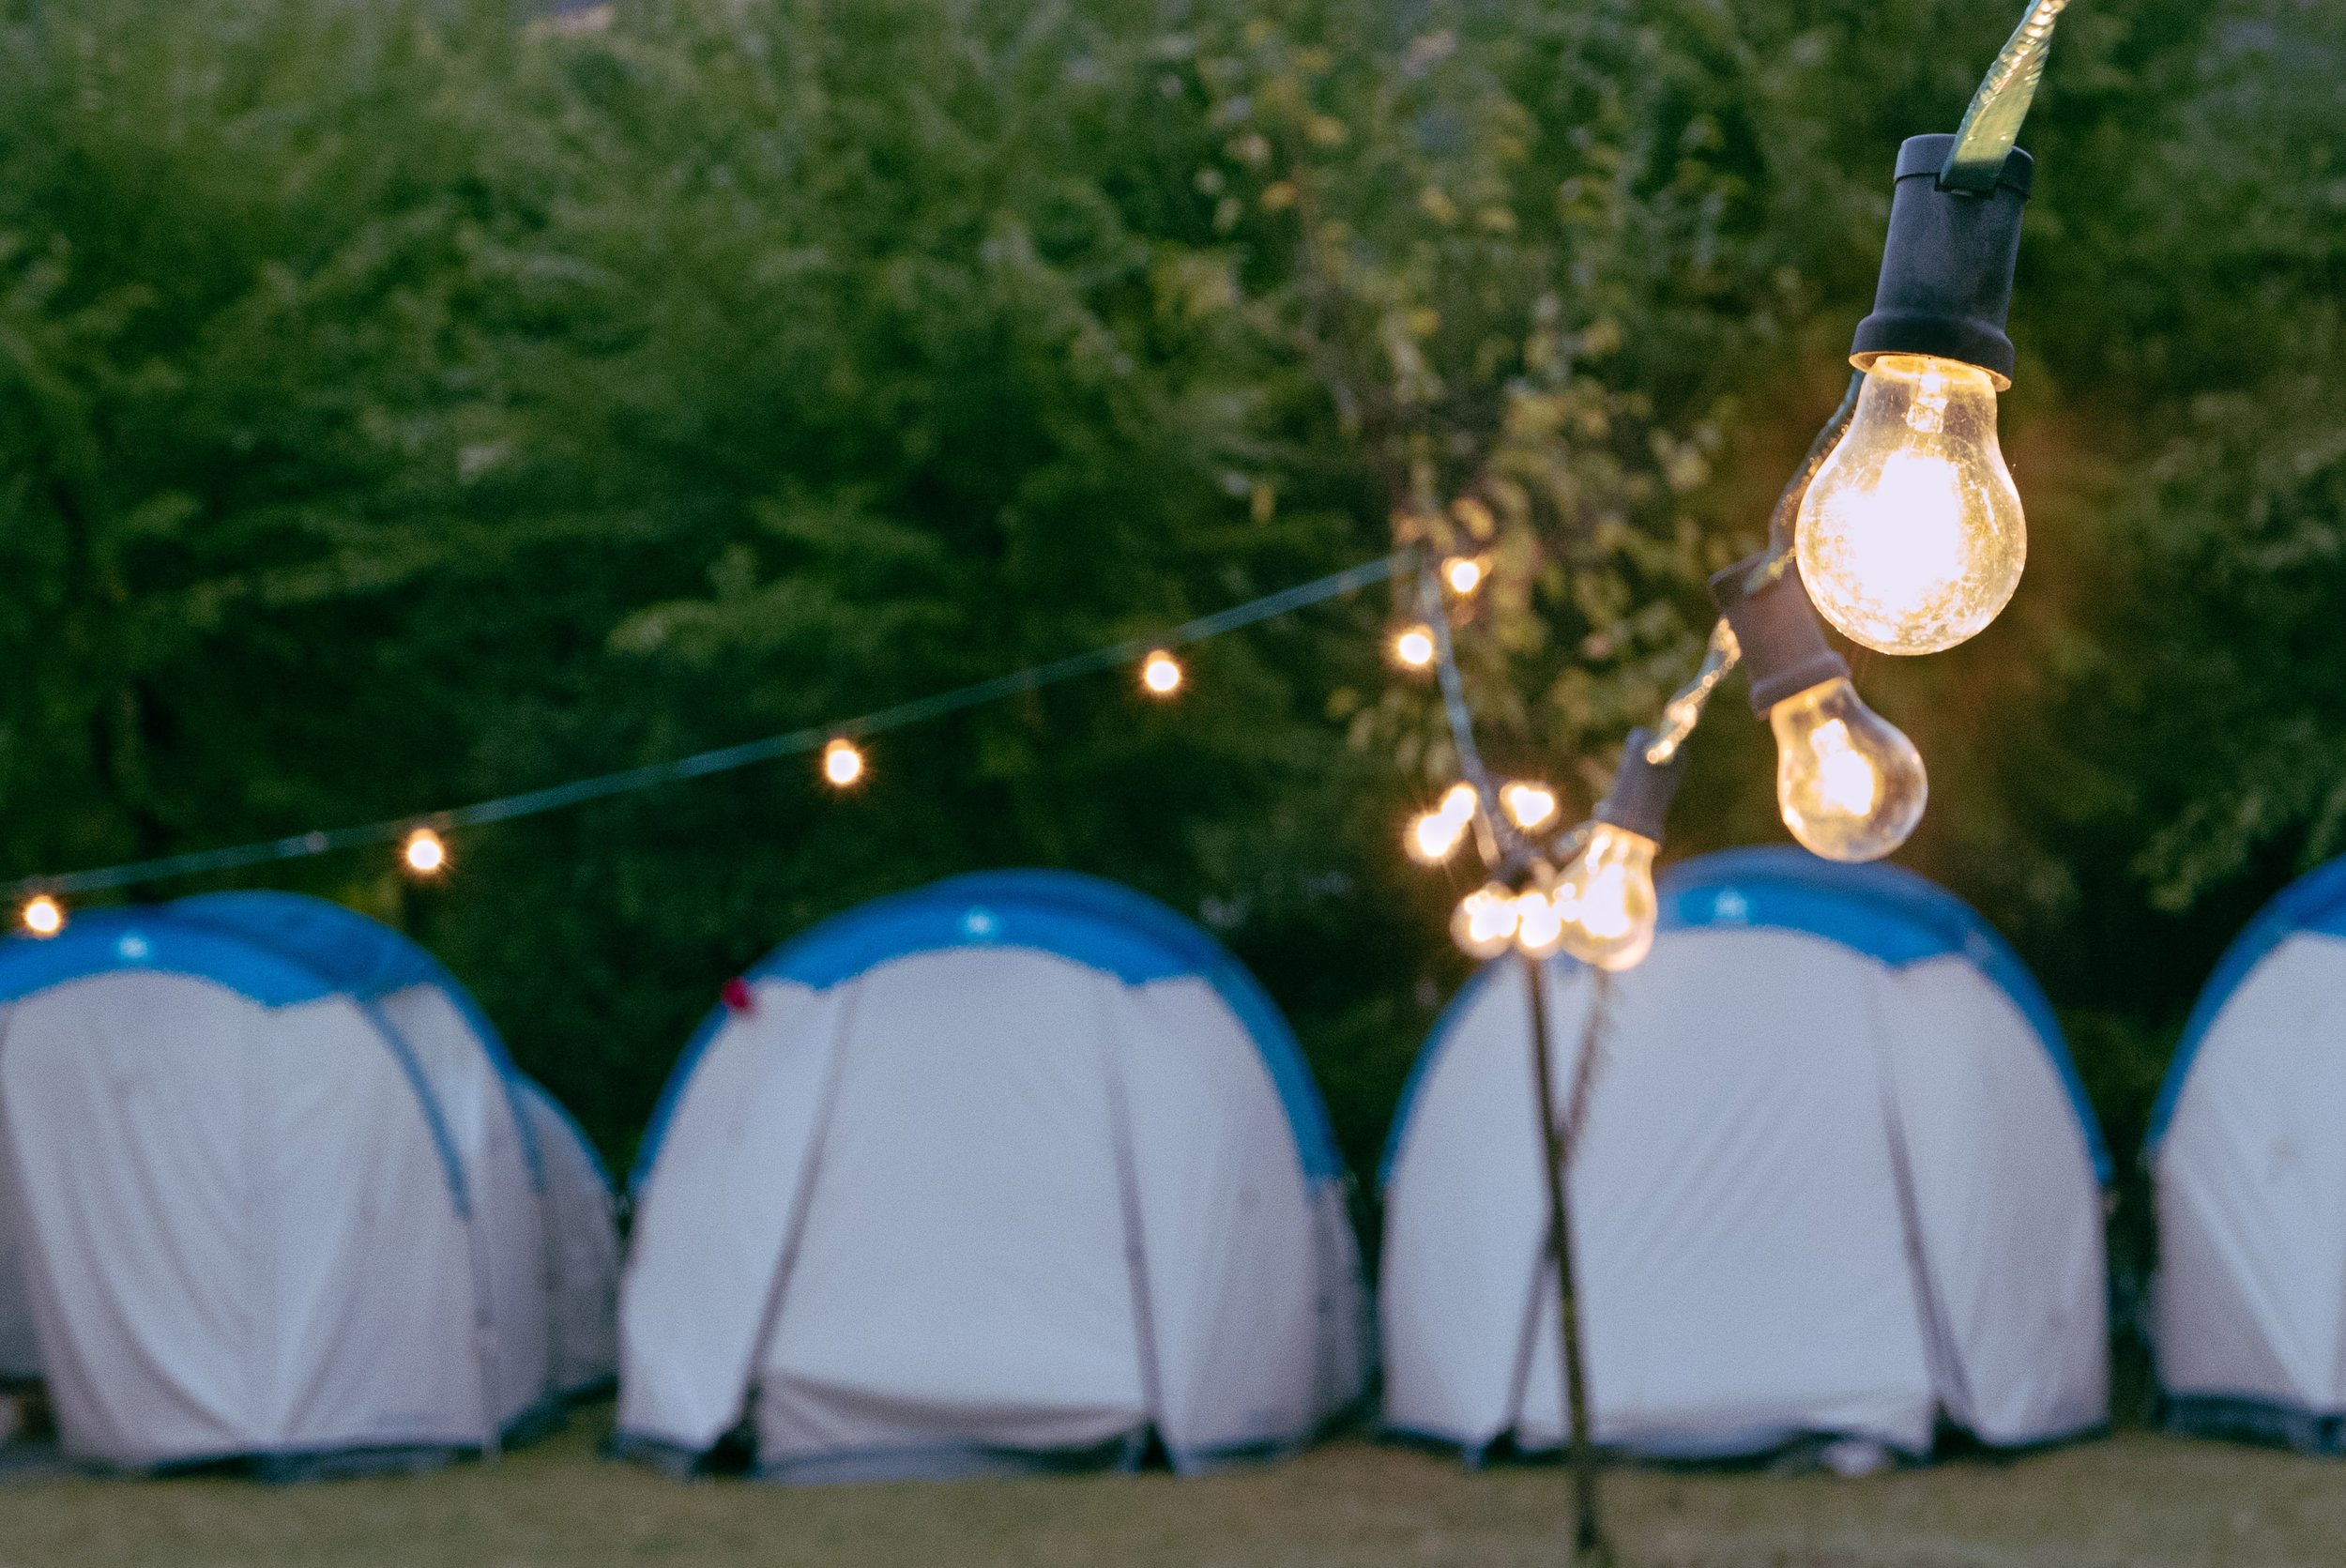 Light camp. Tent Camping Lights. Гирлянда для кемпинга. Лампа для кемпинга на огне. Свет для кемпинга.